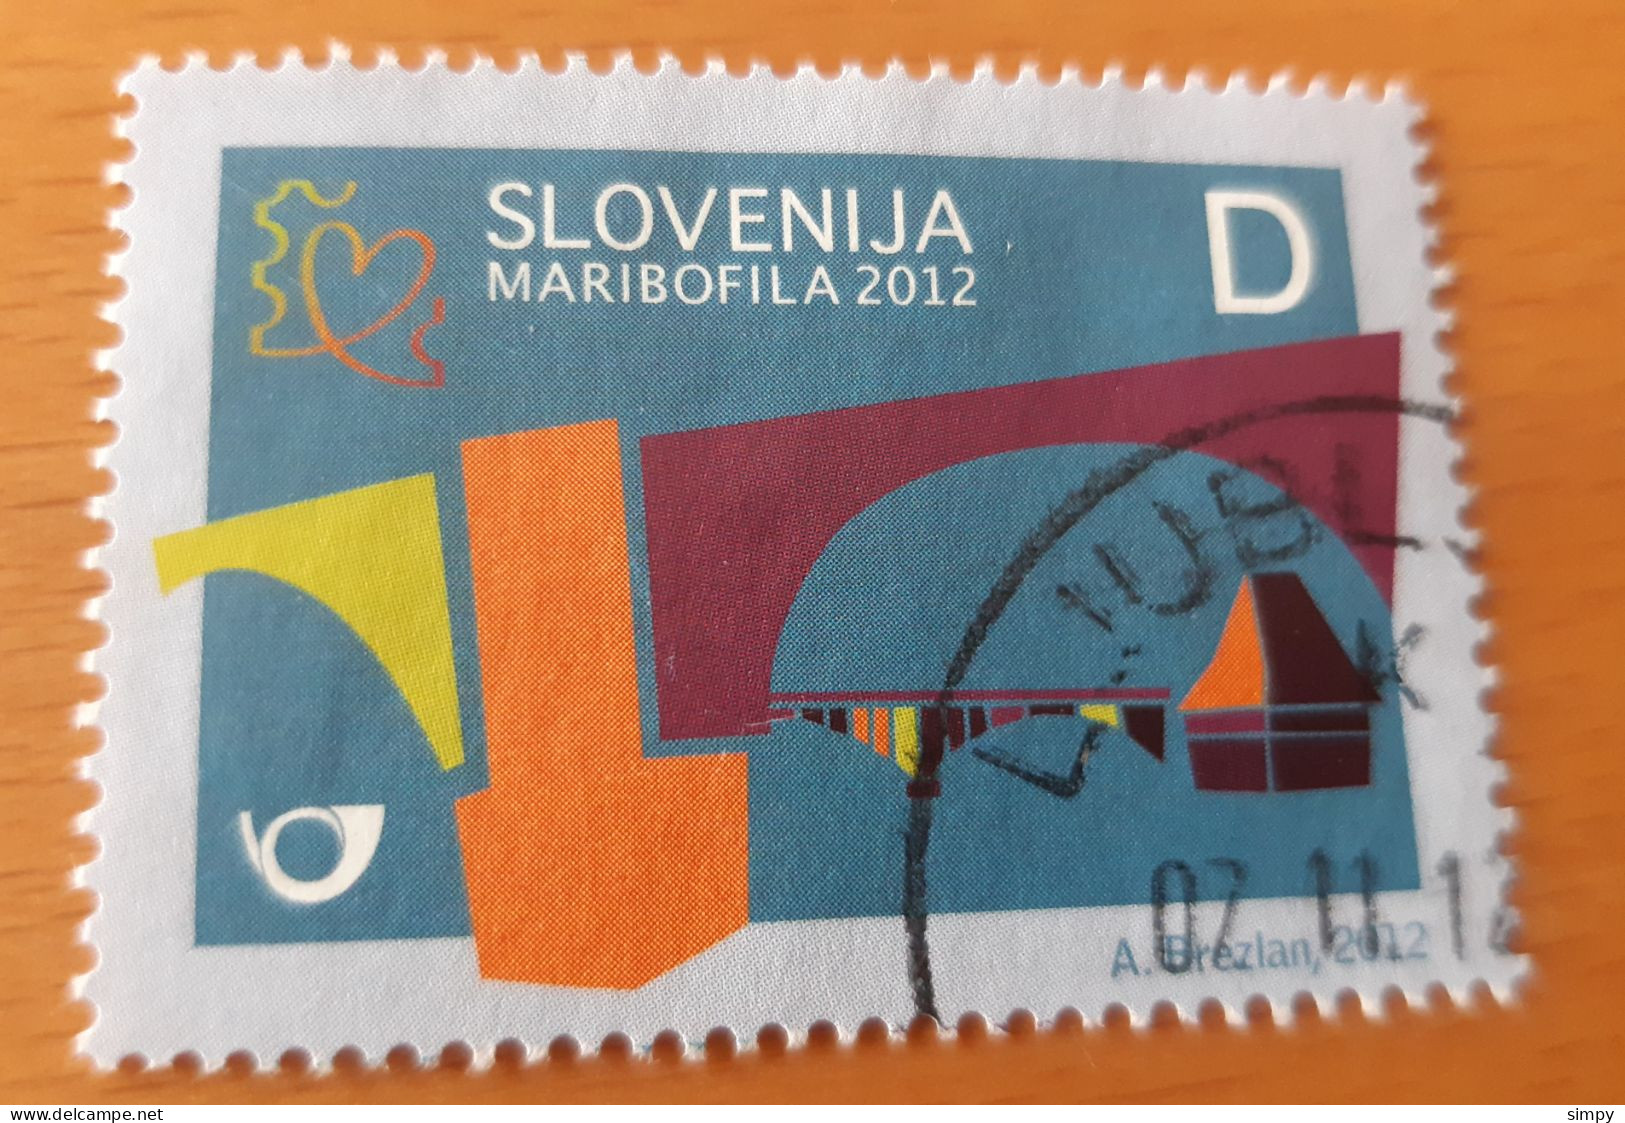 SLOVENIA 2012 MariboFila Used Stamp - Slovenia